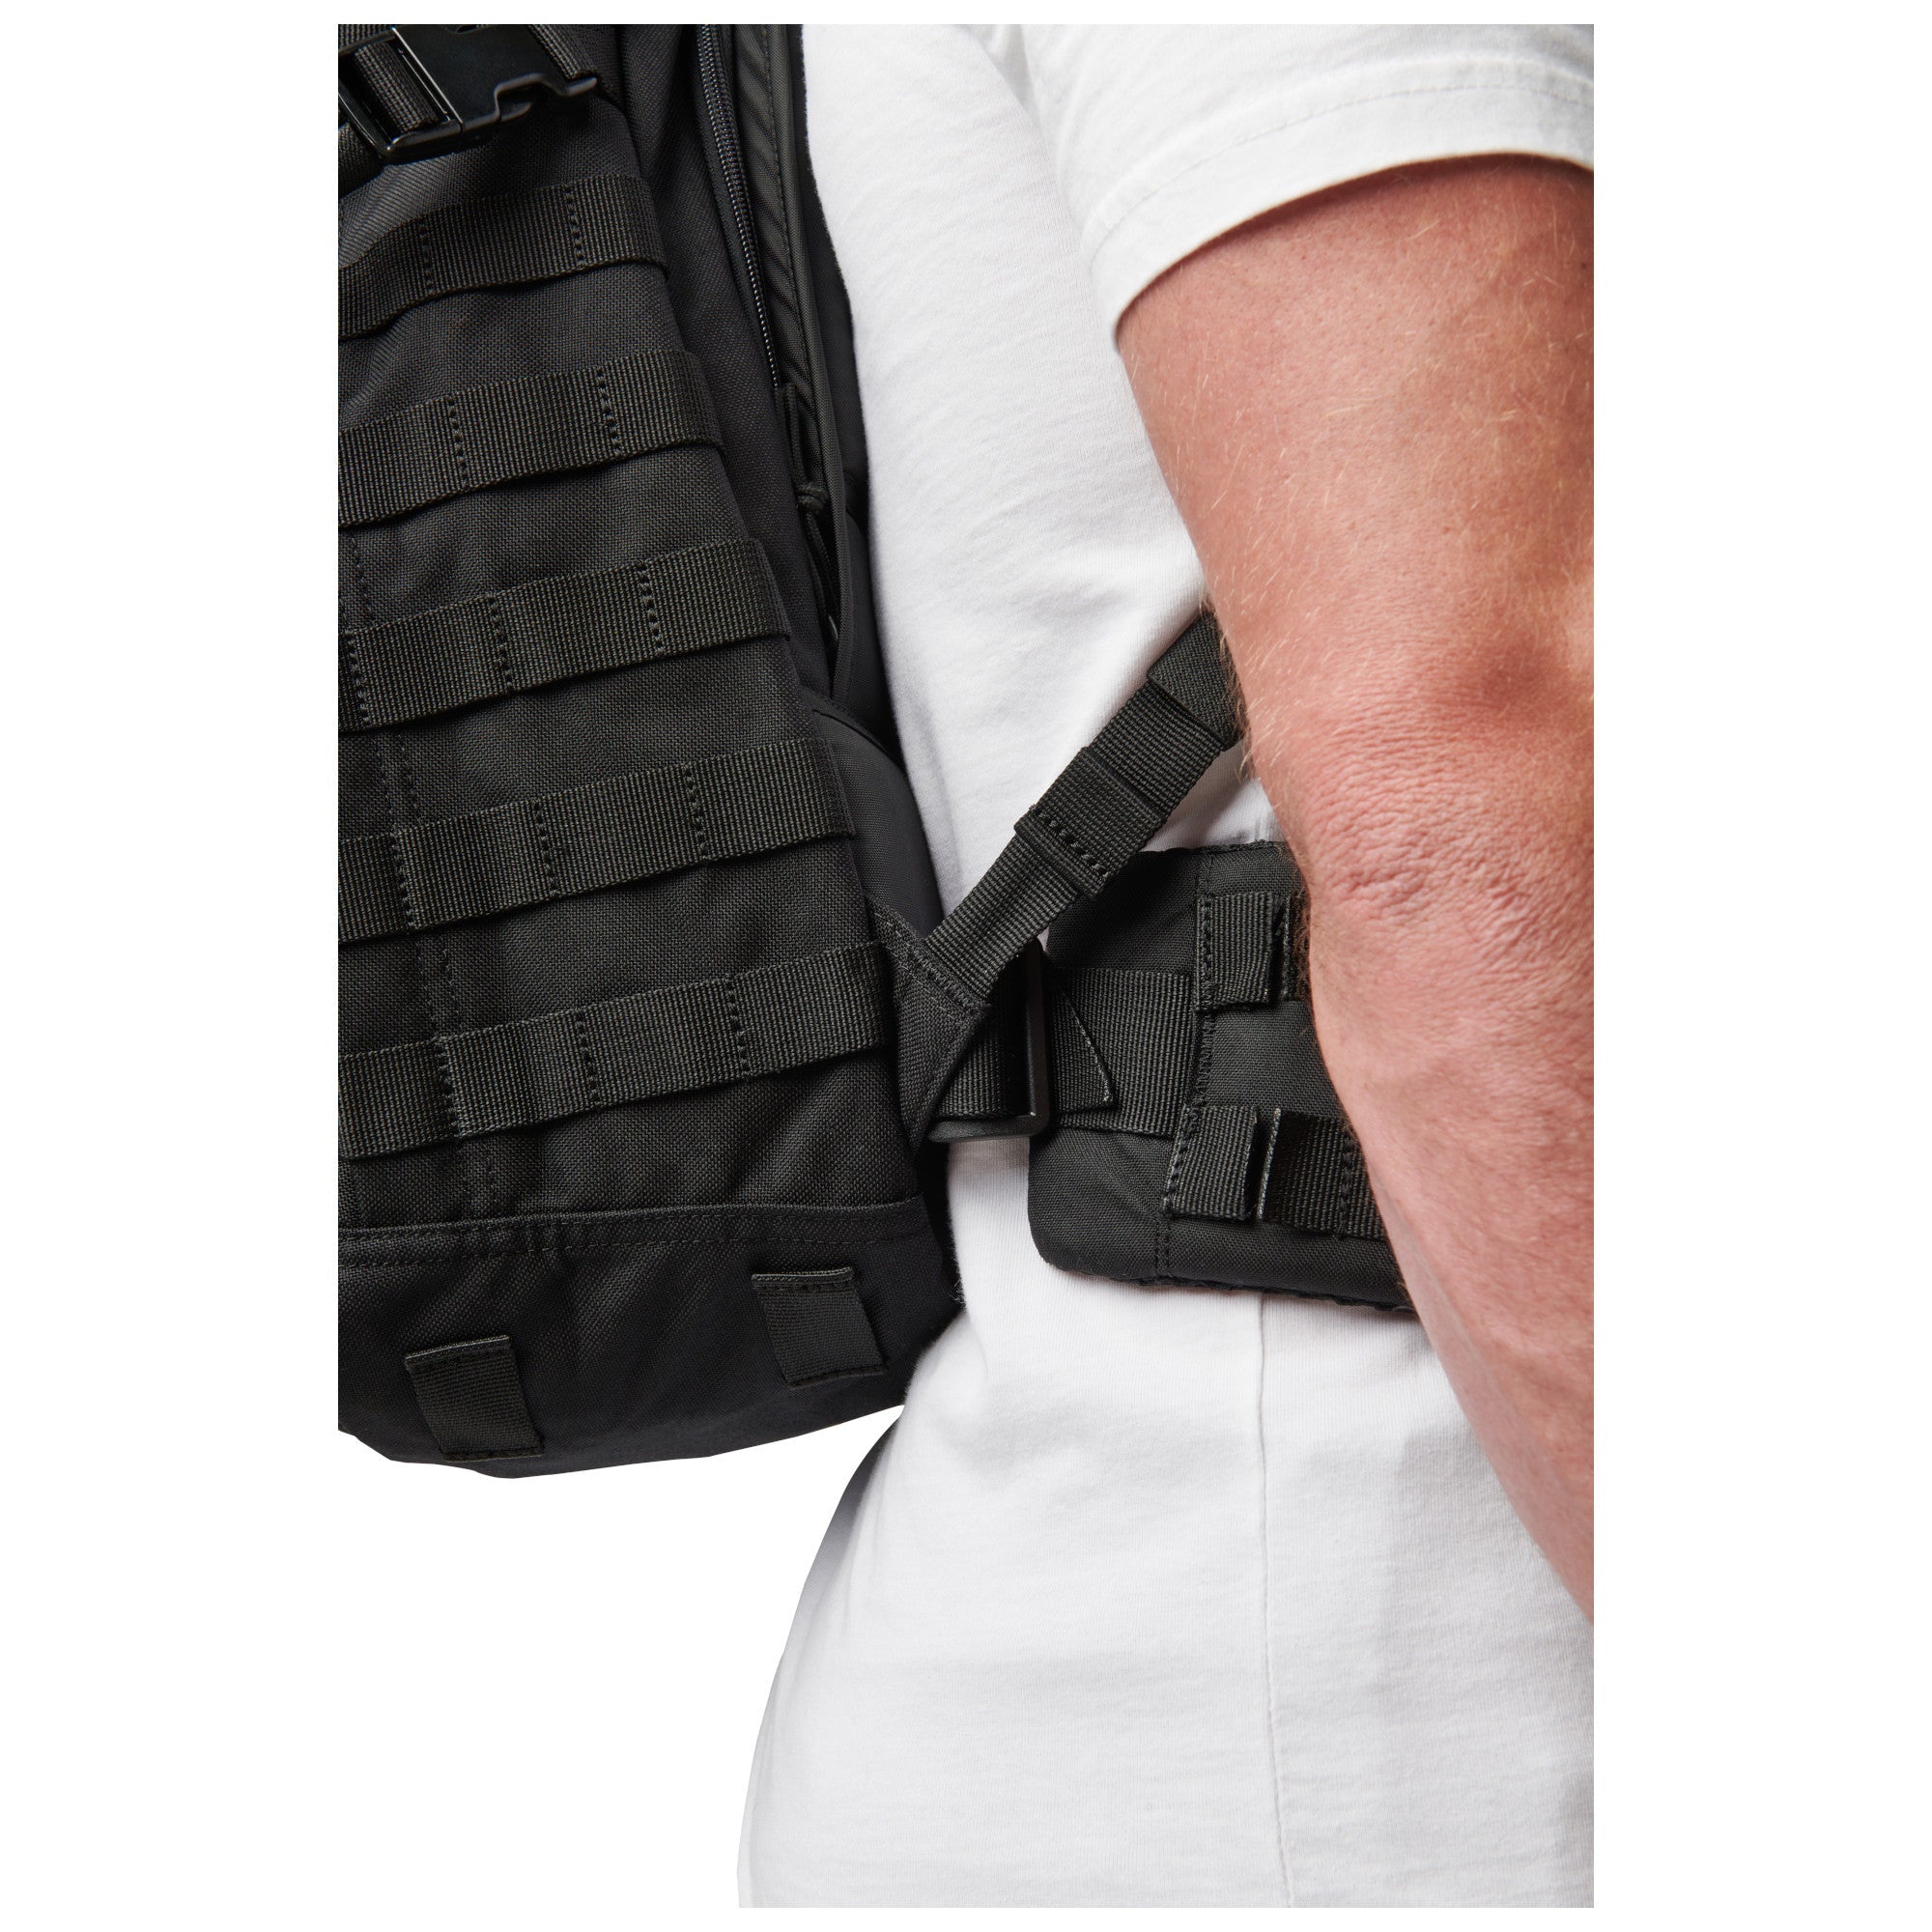 5.11 Tactical RUSH Belt Kit Tactical Gear Australia Supplier Distributor Dealer